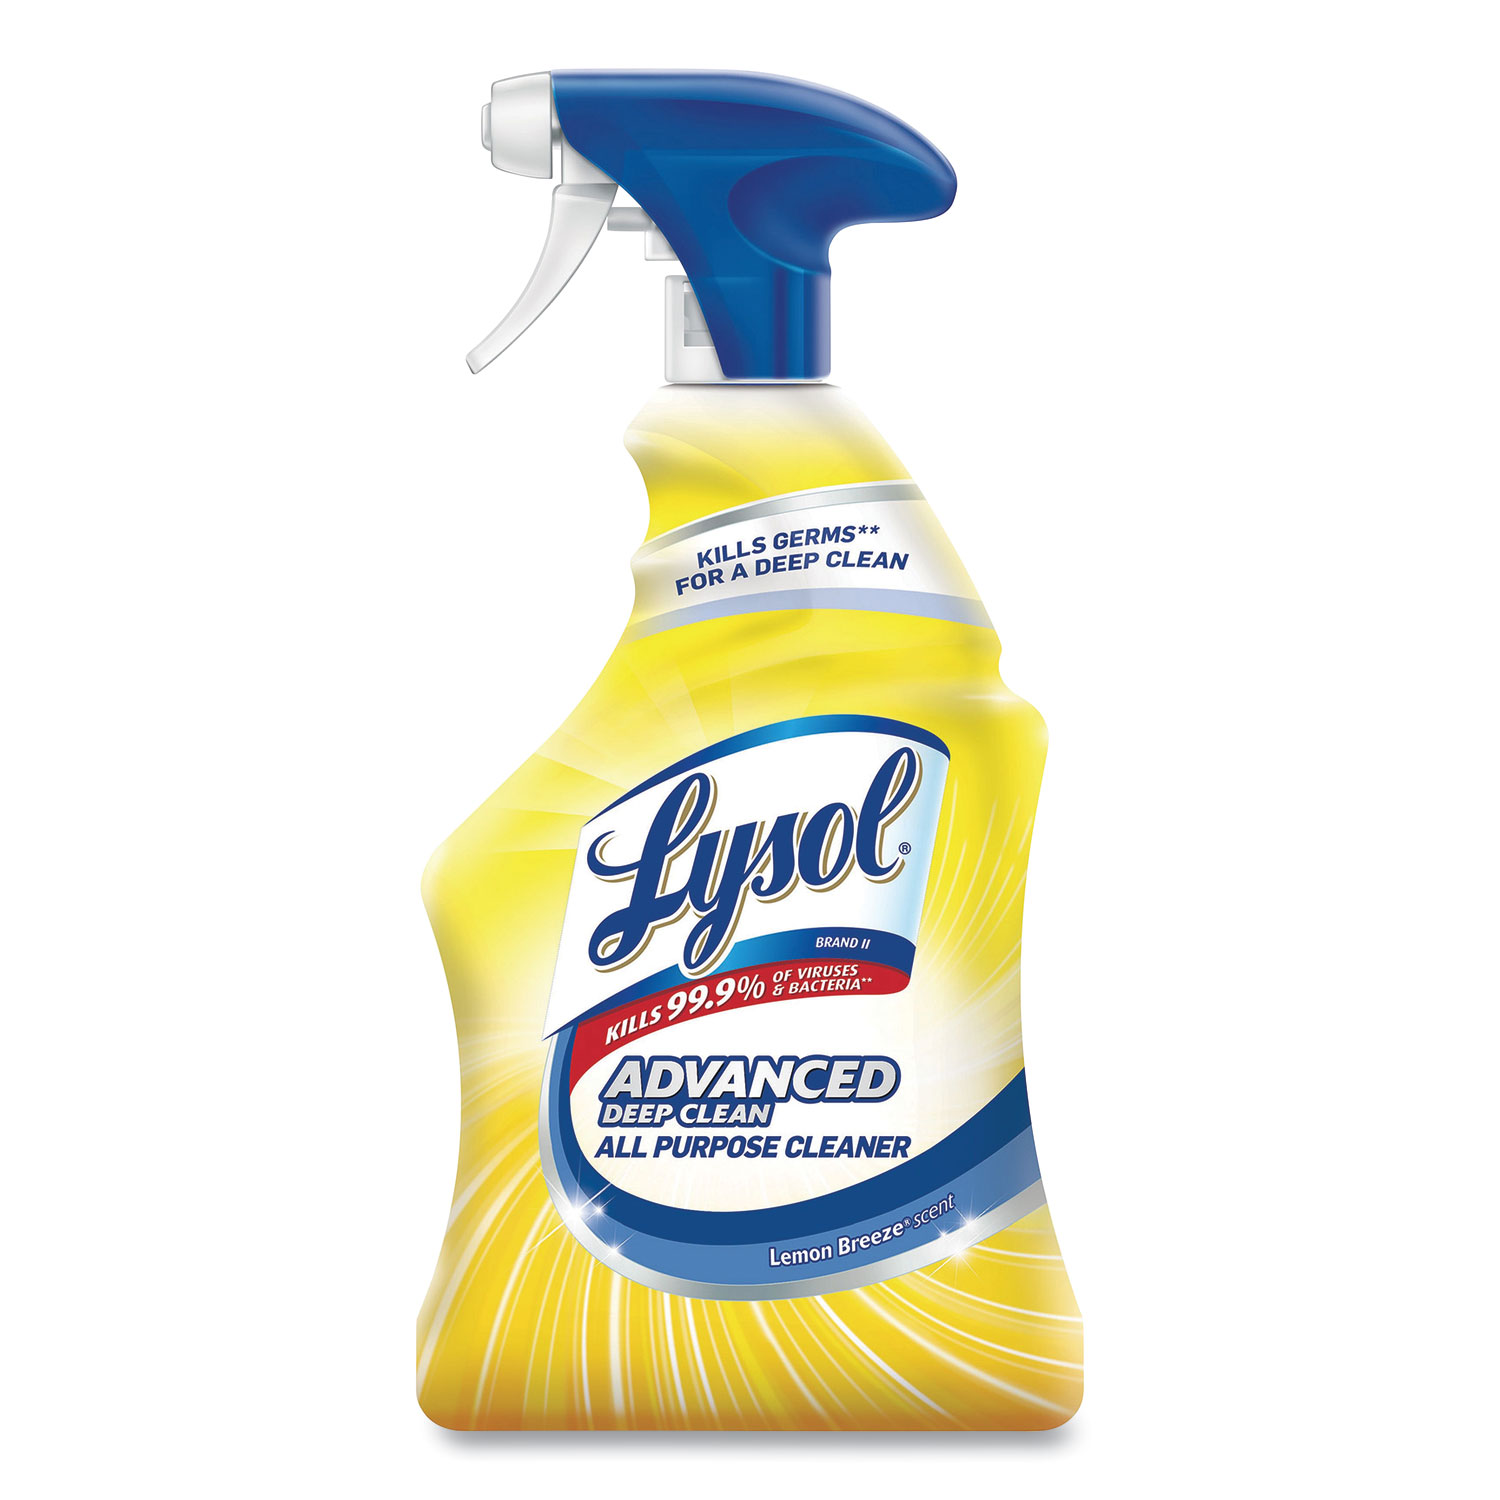  Professional LYSOL Brand 19200-00351 Advanced Deep Clean All Purpose Cleaner, Lemon Breeze, 32 oz Trigger Spray Bottle (RAC00351EA) 